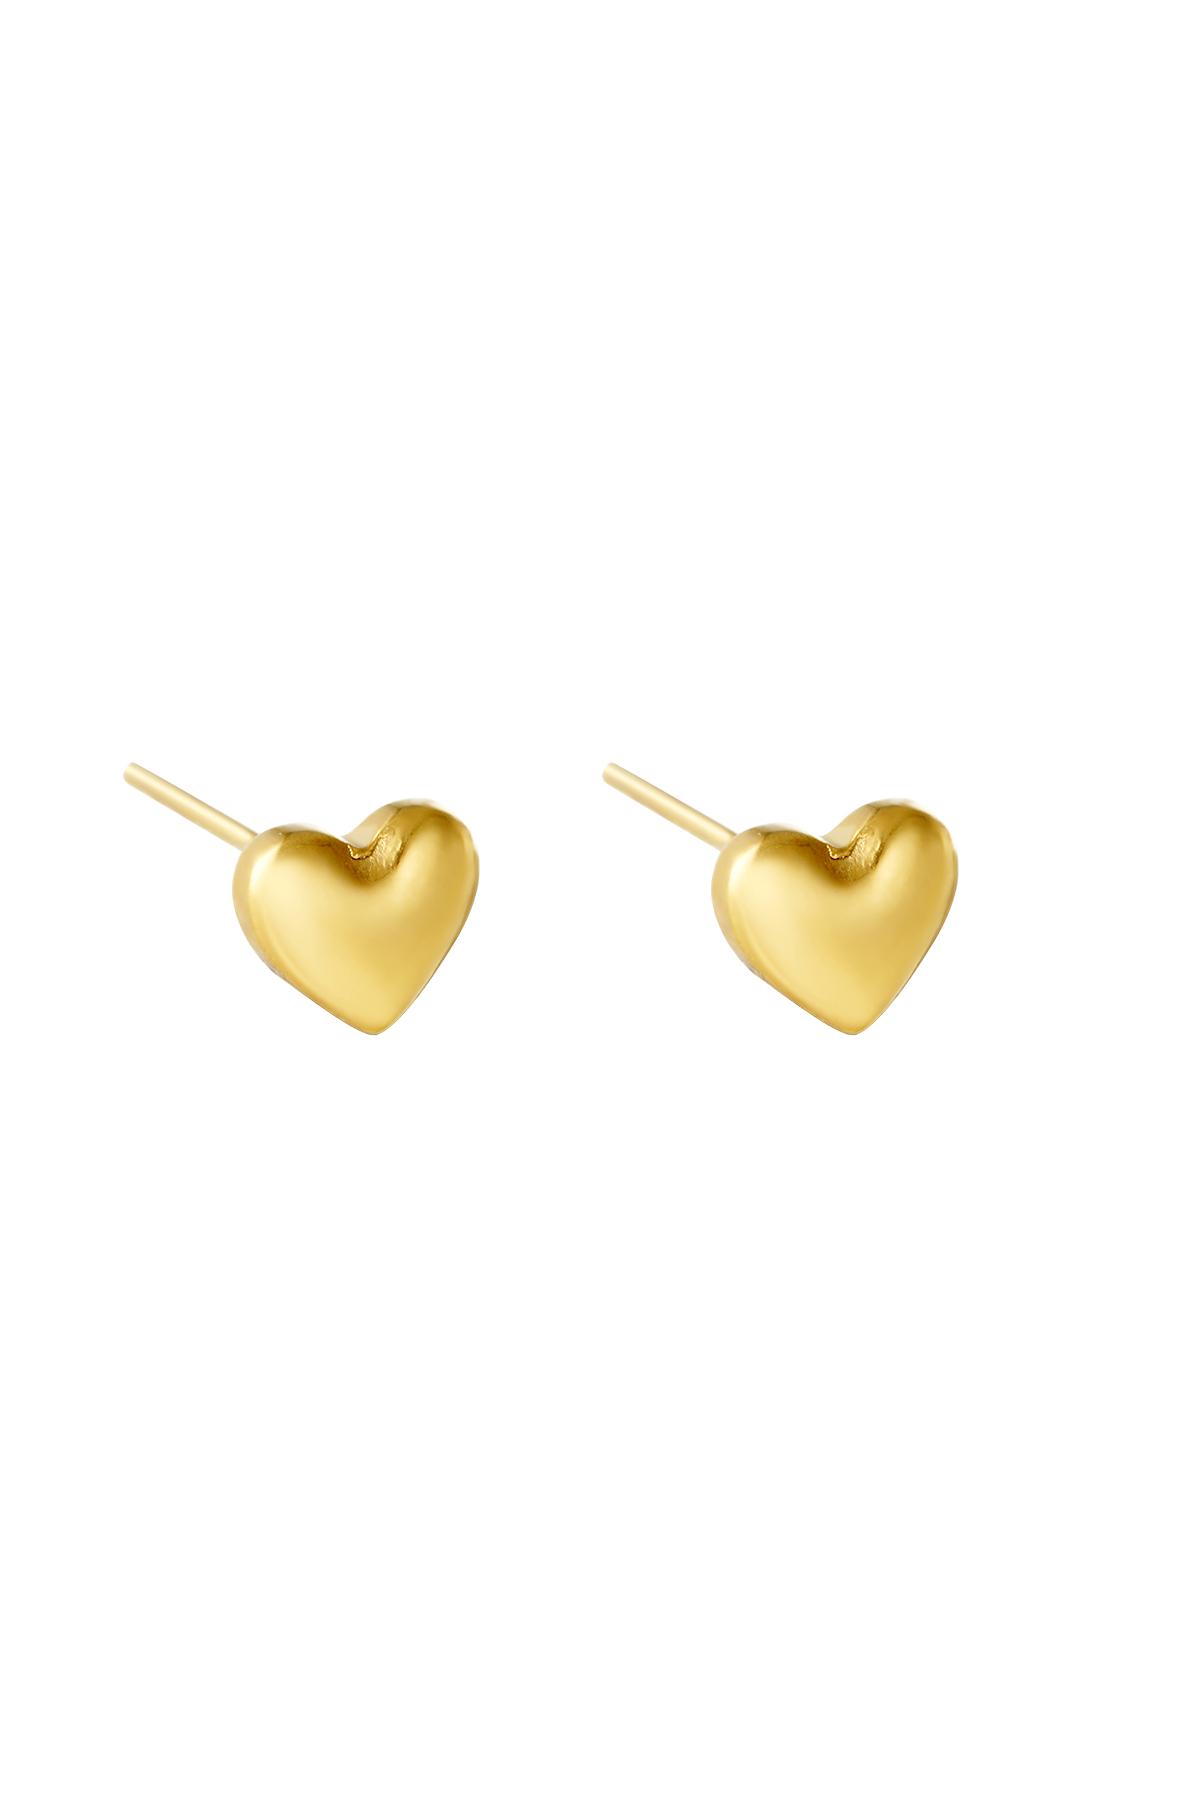 Gold / Earrings Bold Heart Gold Stainless Steel 